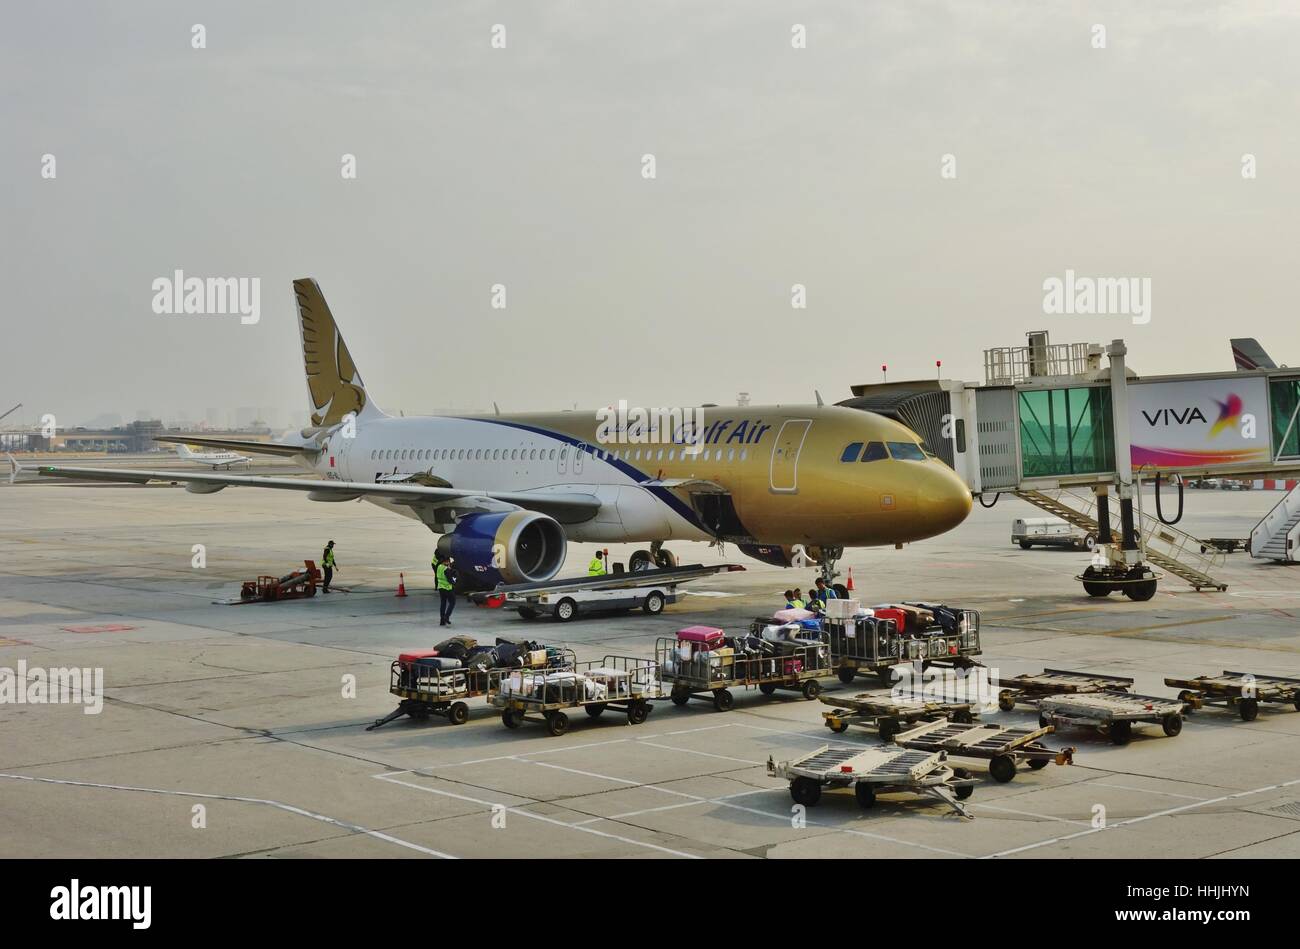 The Bahrain International Airport (BAH) near Manama, the capital of Bahrain. It is a hub for national carrier Gulf Air (GF). Stock Photo